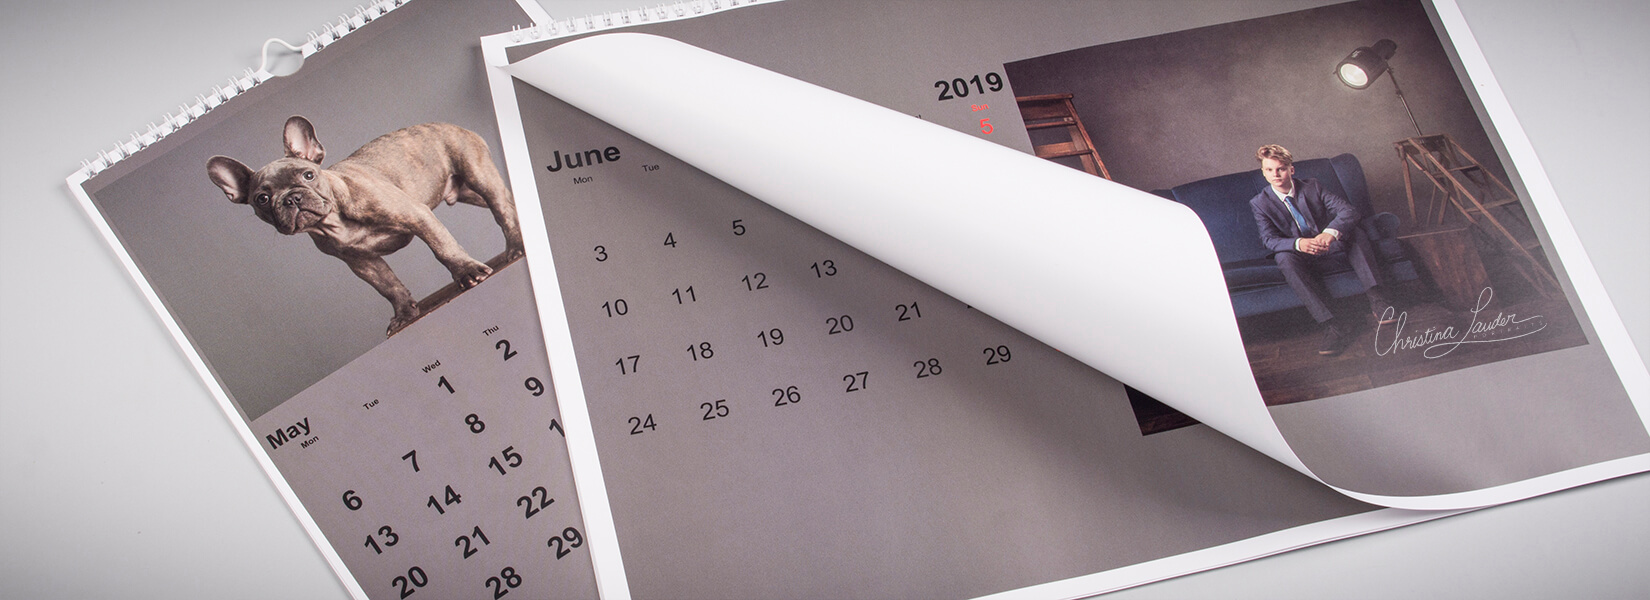 Calendar basic photo calendar professional print nphoto printing lab personalised calendar